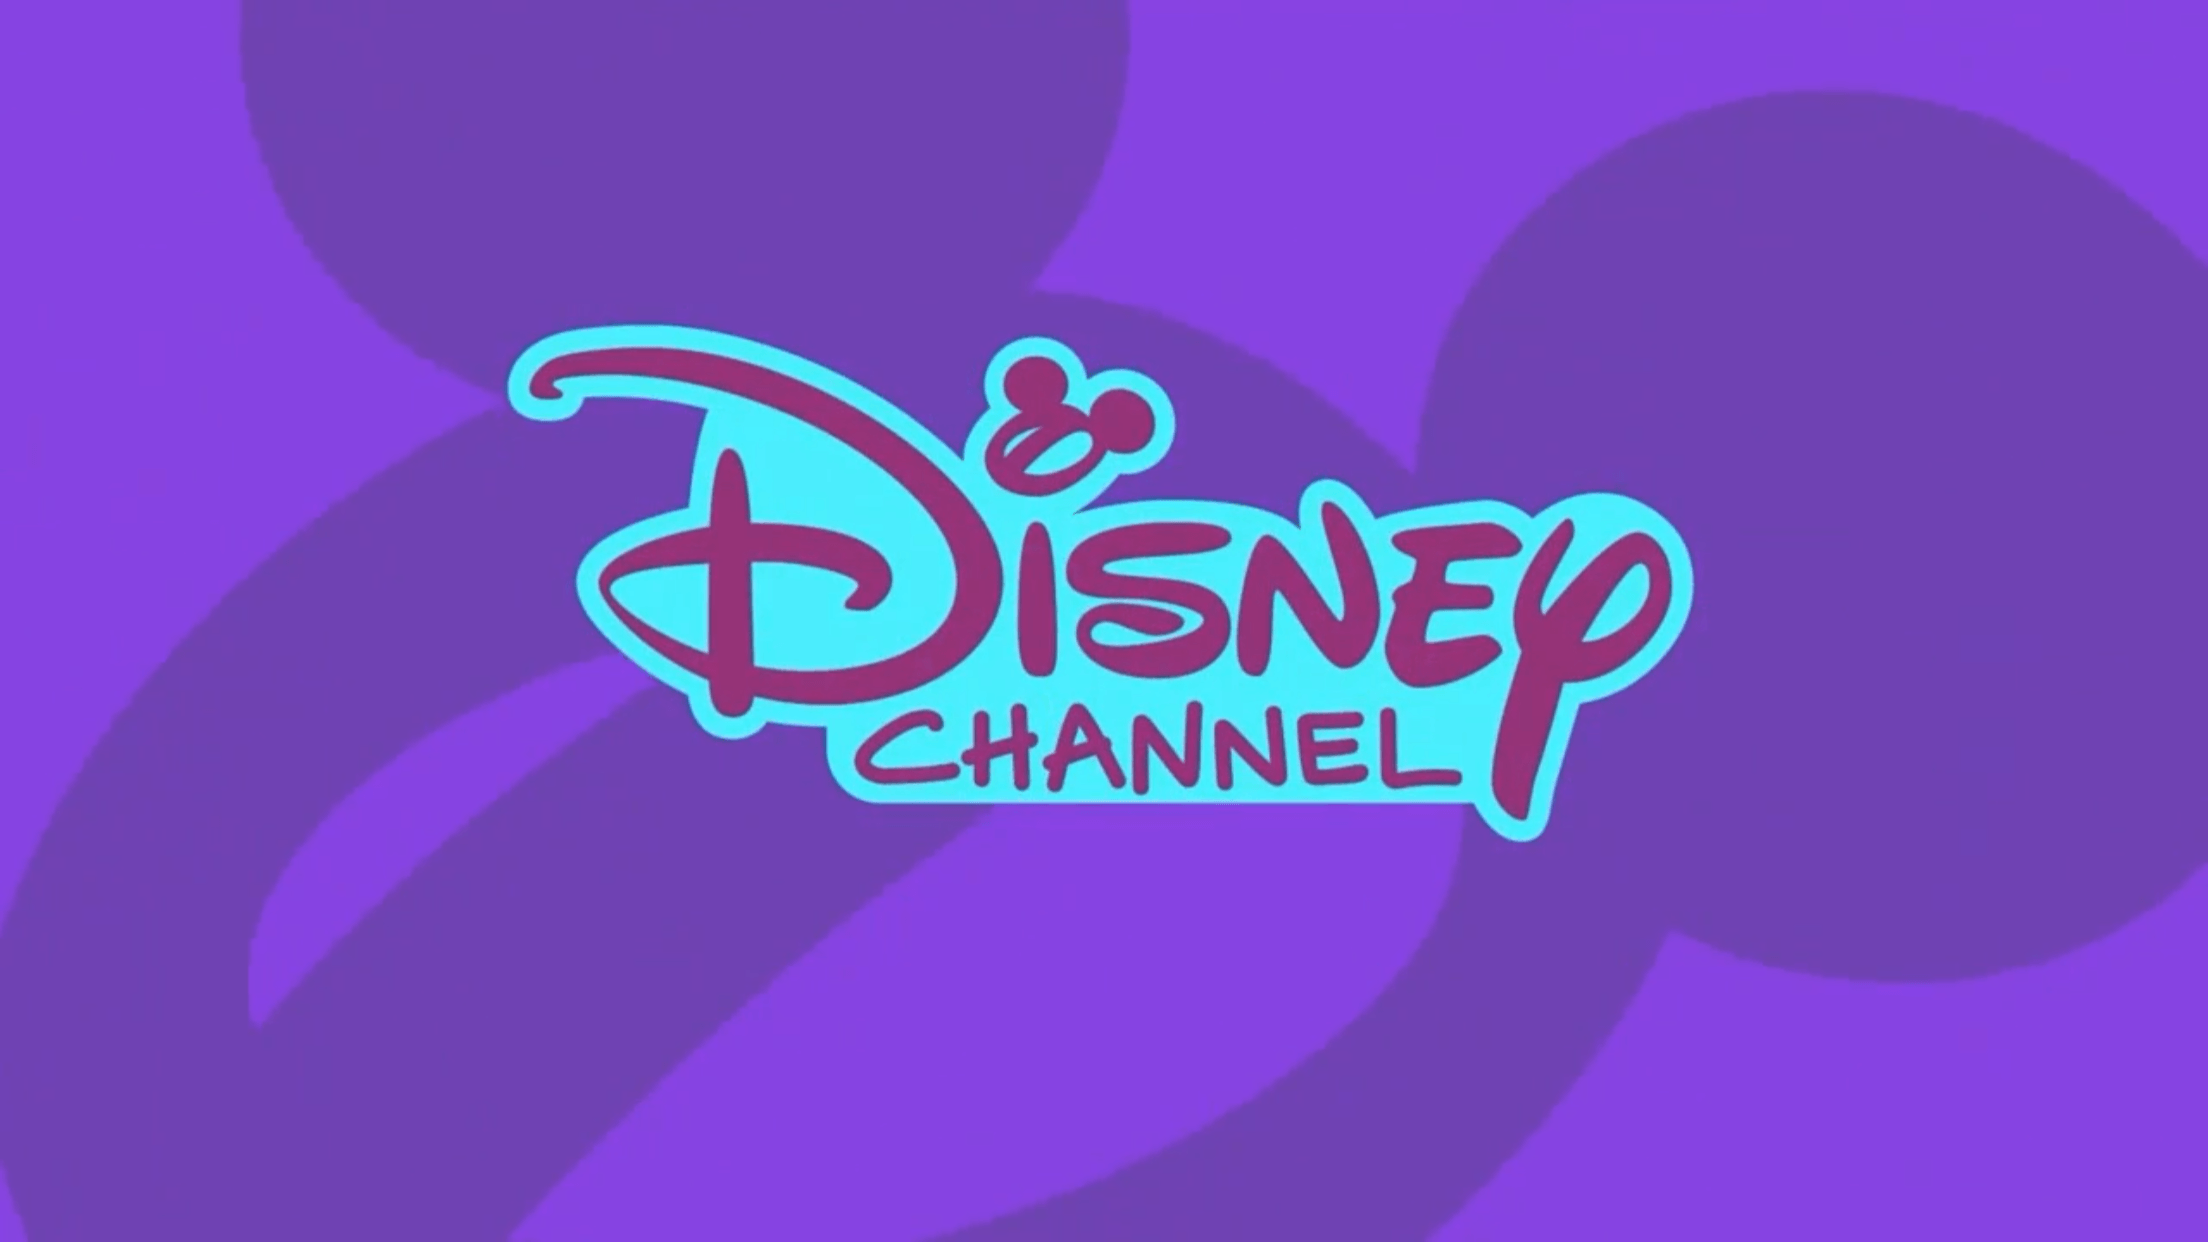 Disney Channel 2017 Logo - Disney Channel 2017 Purple Background.png. Logopedia